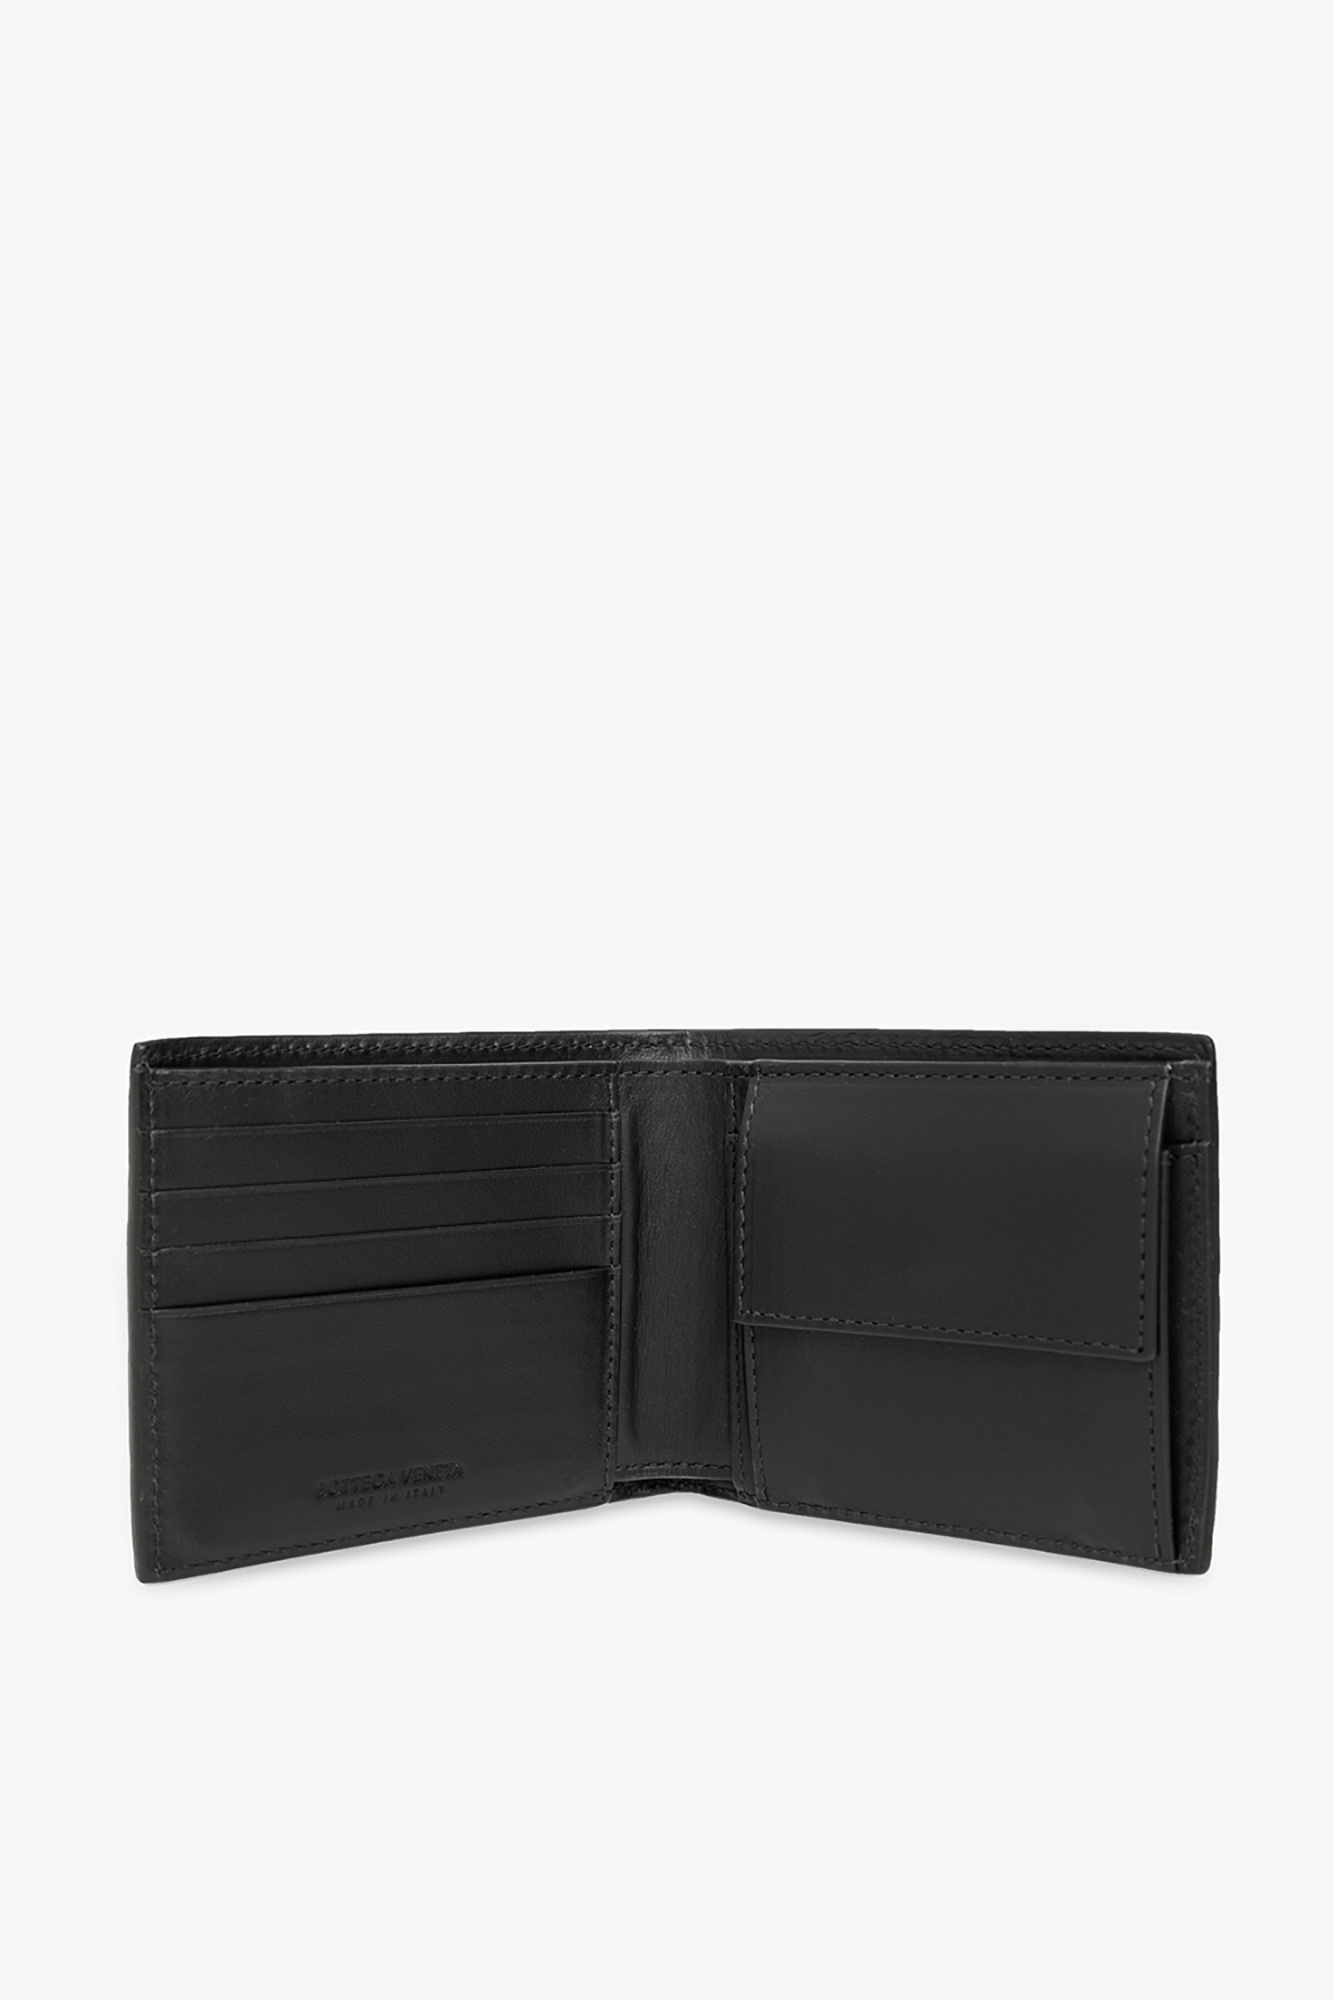 Bottega Veneta Sunglasses wallet with ‘Intrecciato’ weave